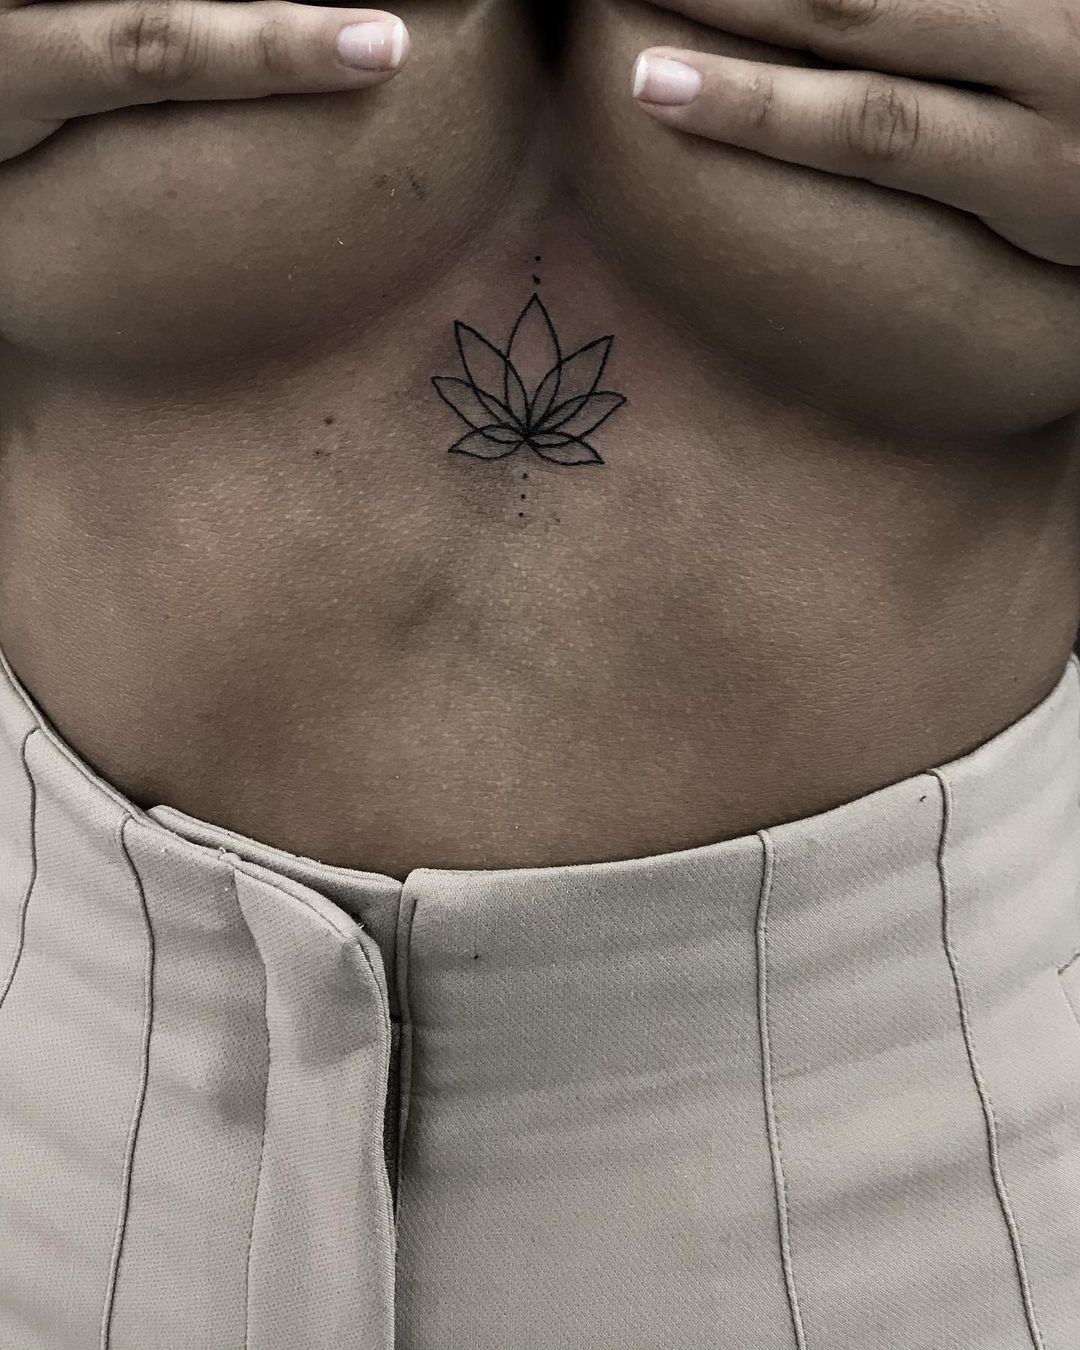 Tatuagem Flor de Lotus 10